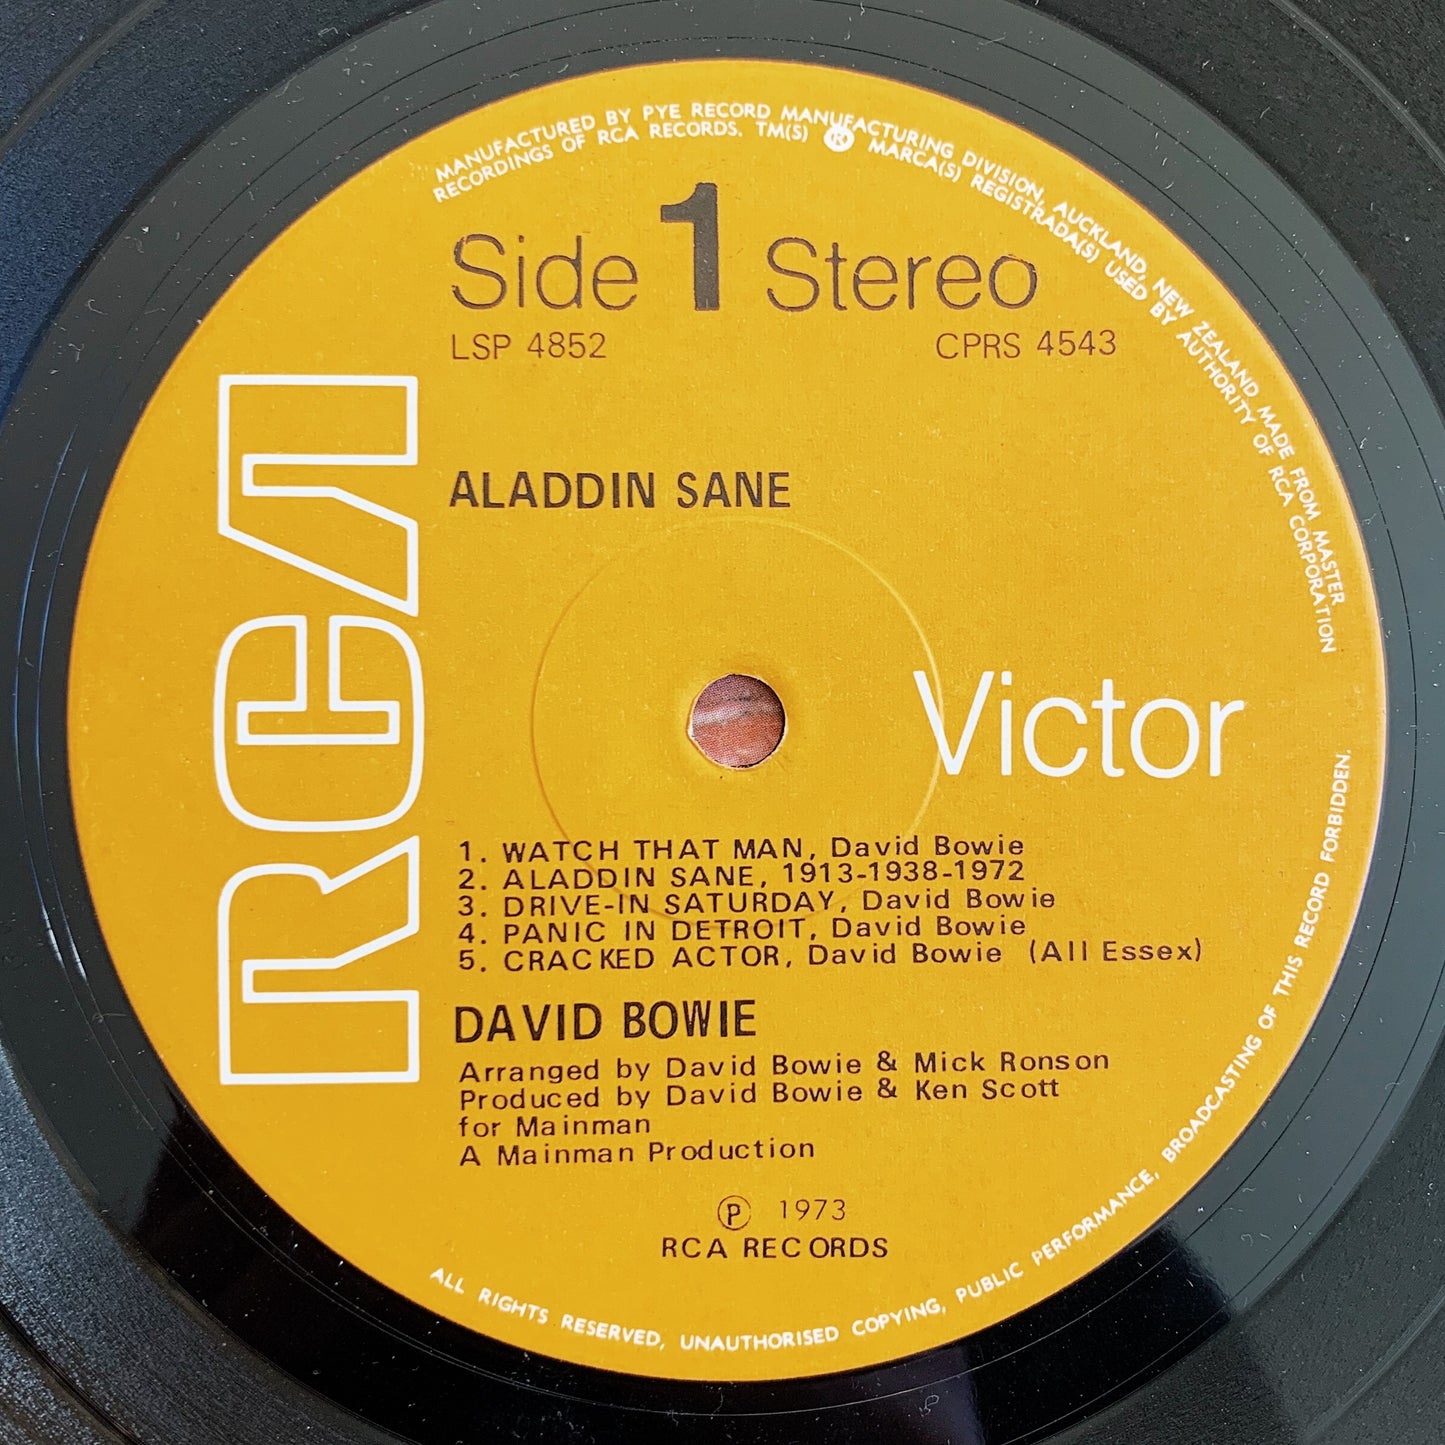 David Bowie / Aladdin Sane LP